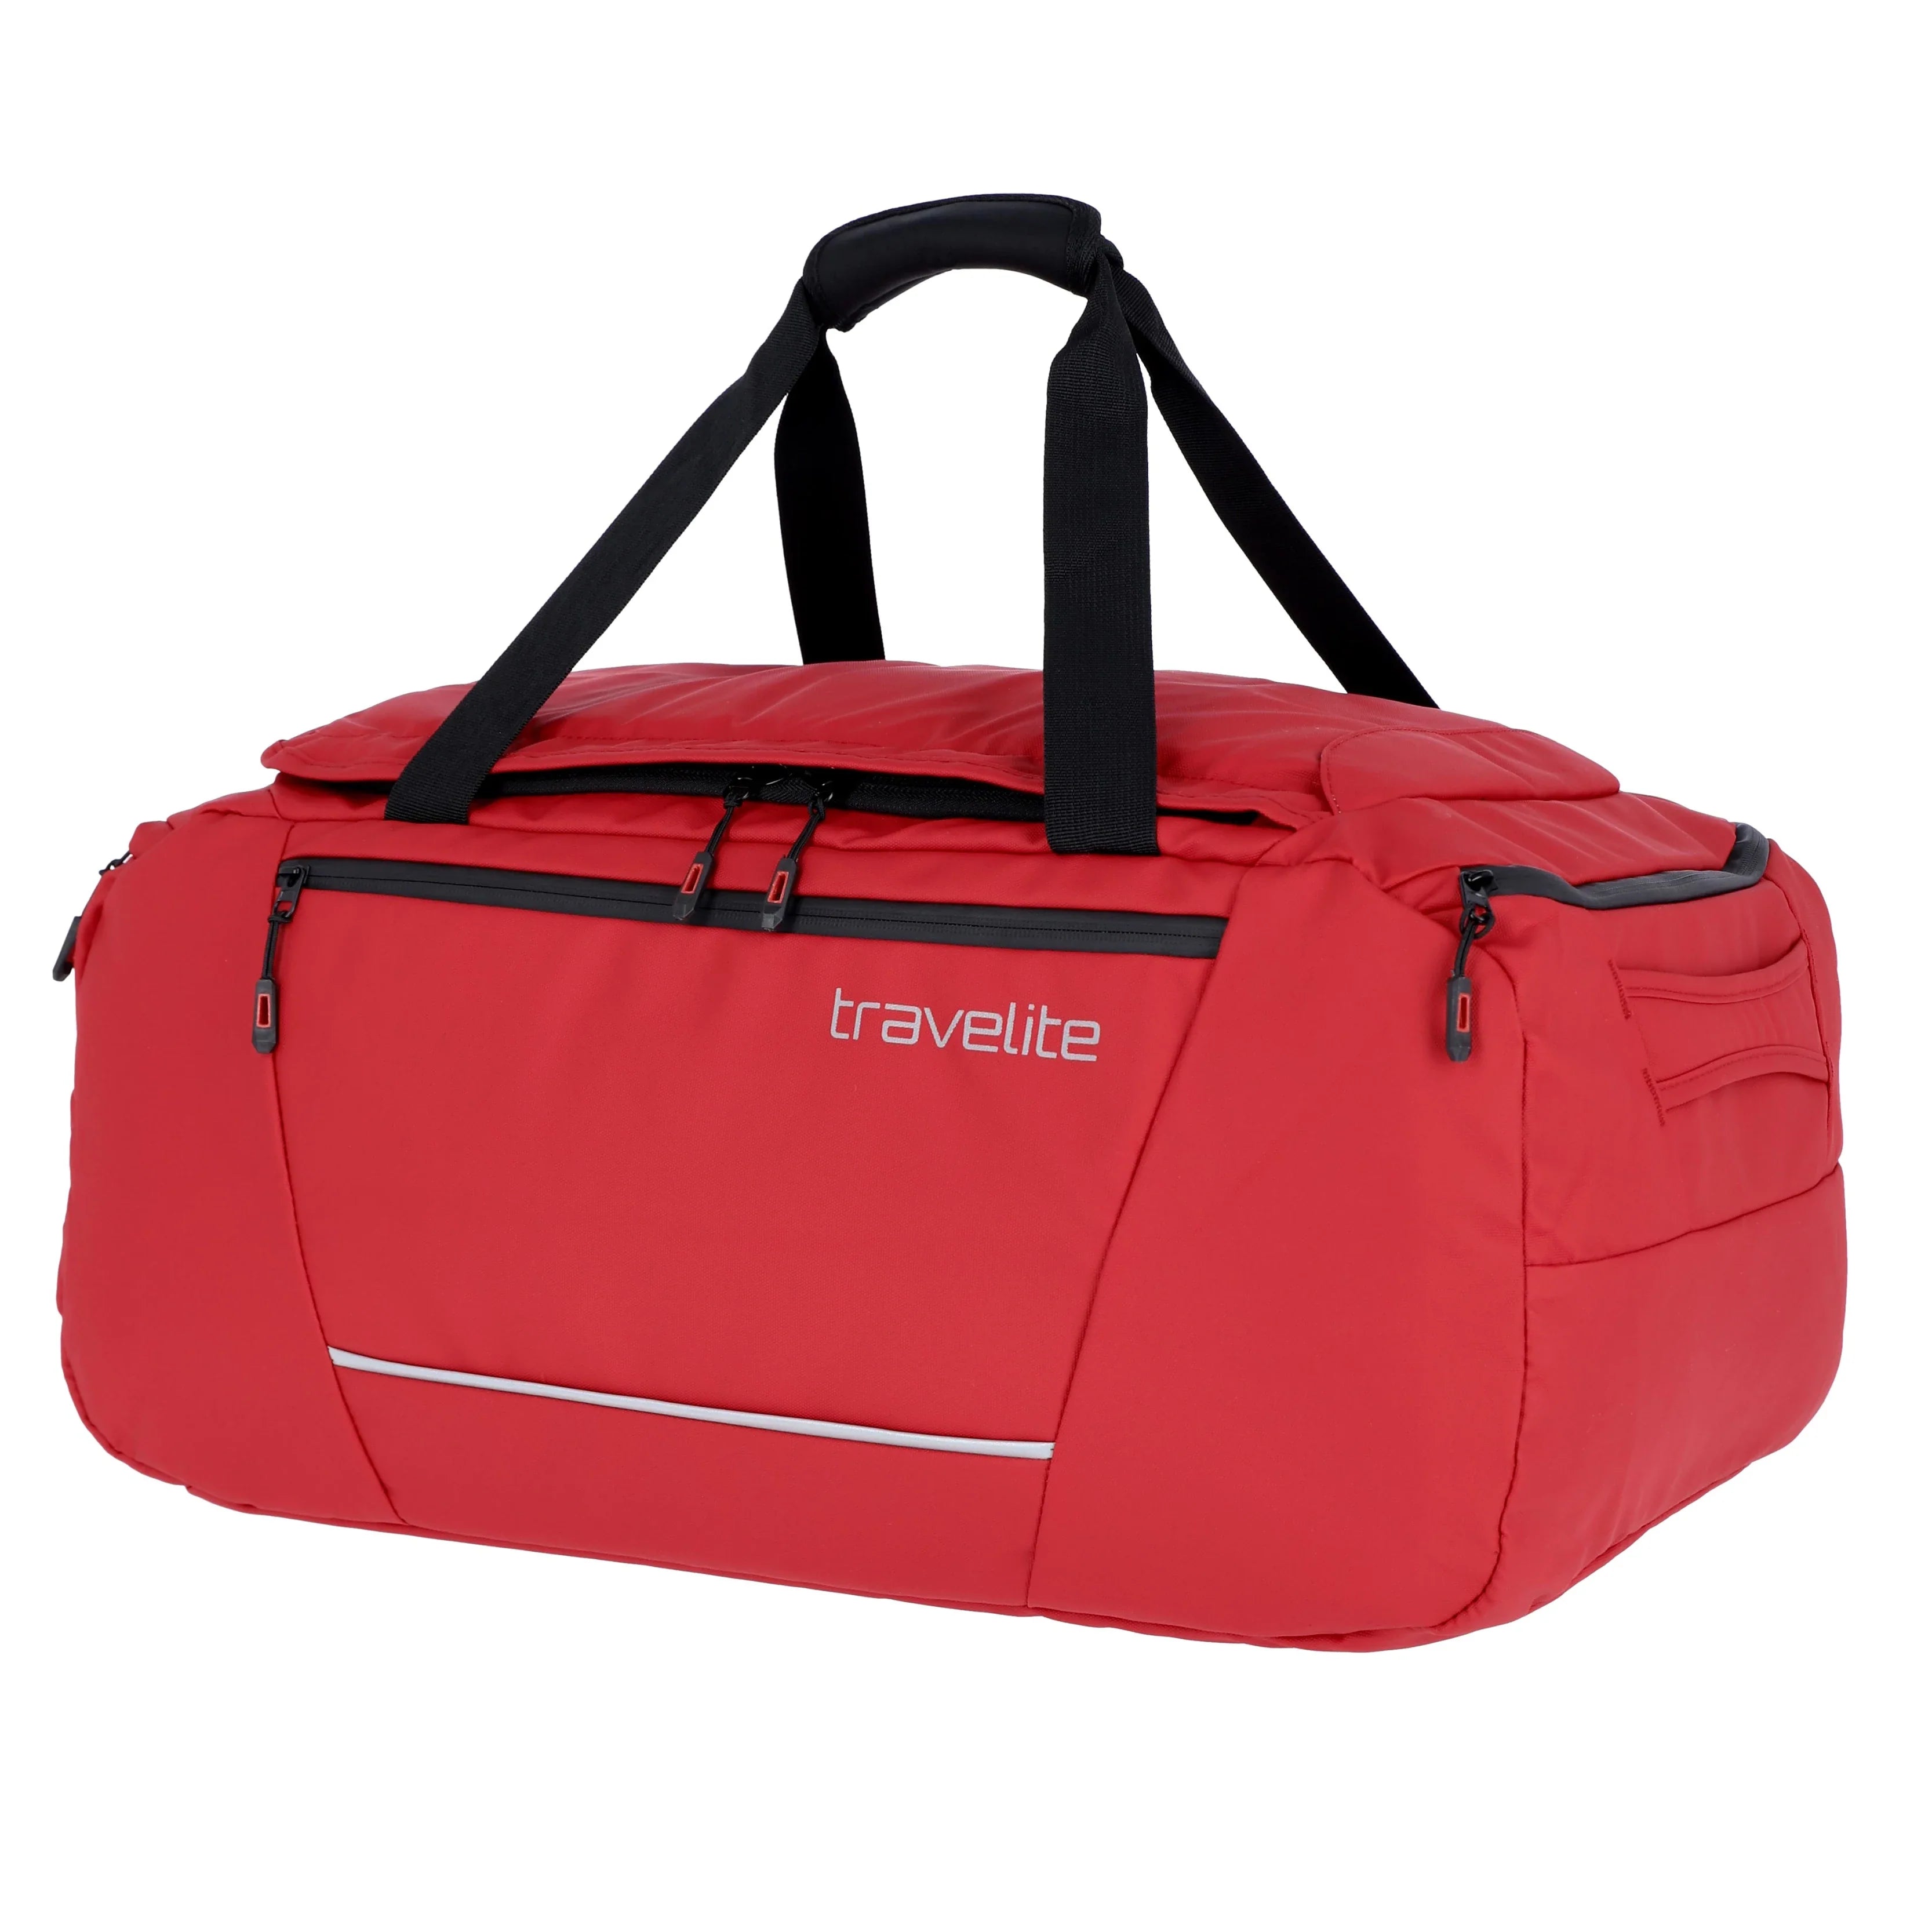 Travelite Basics sports/travel bag 60 cm - red